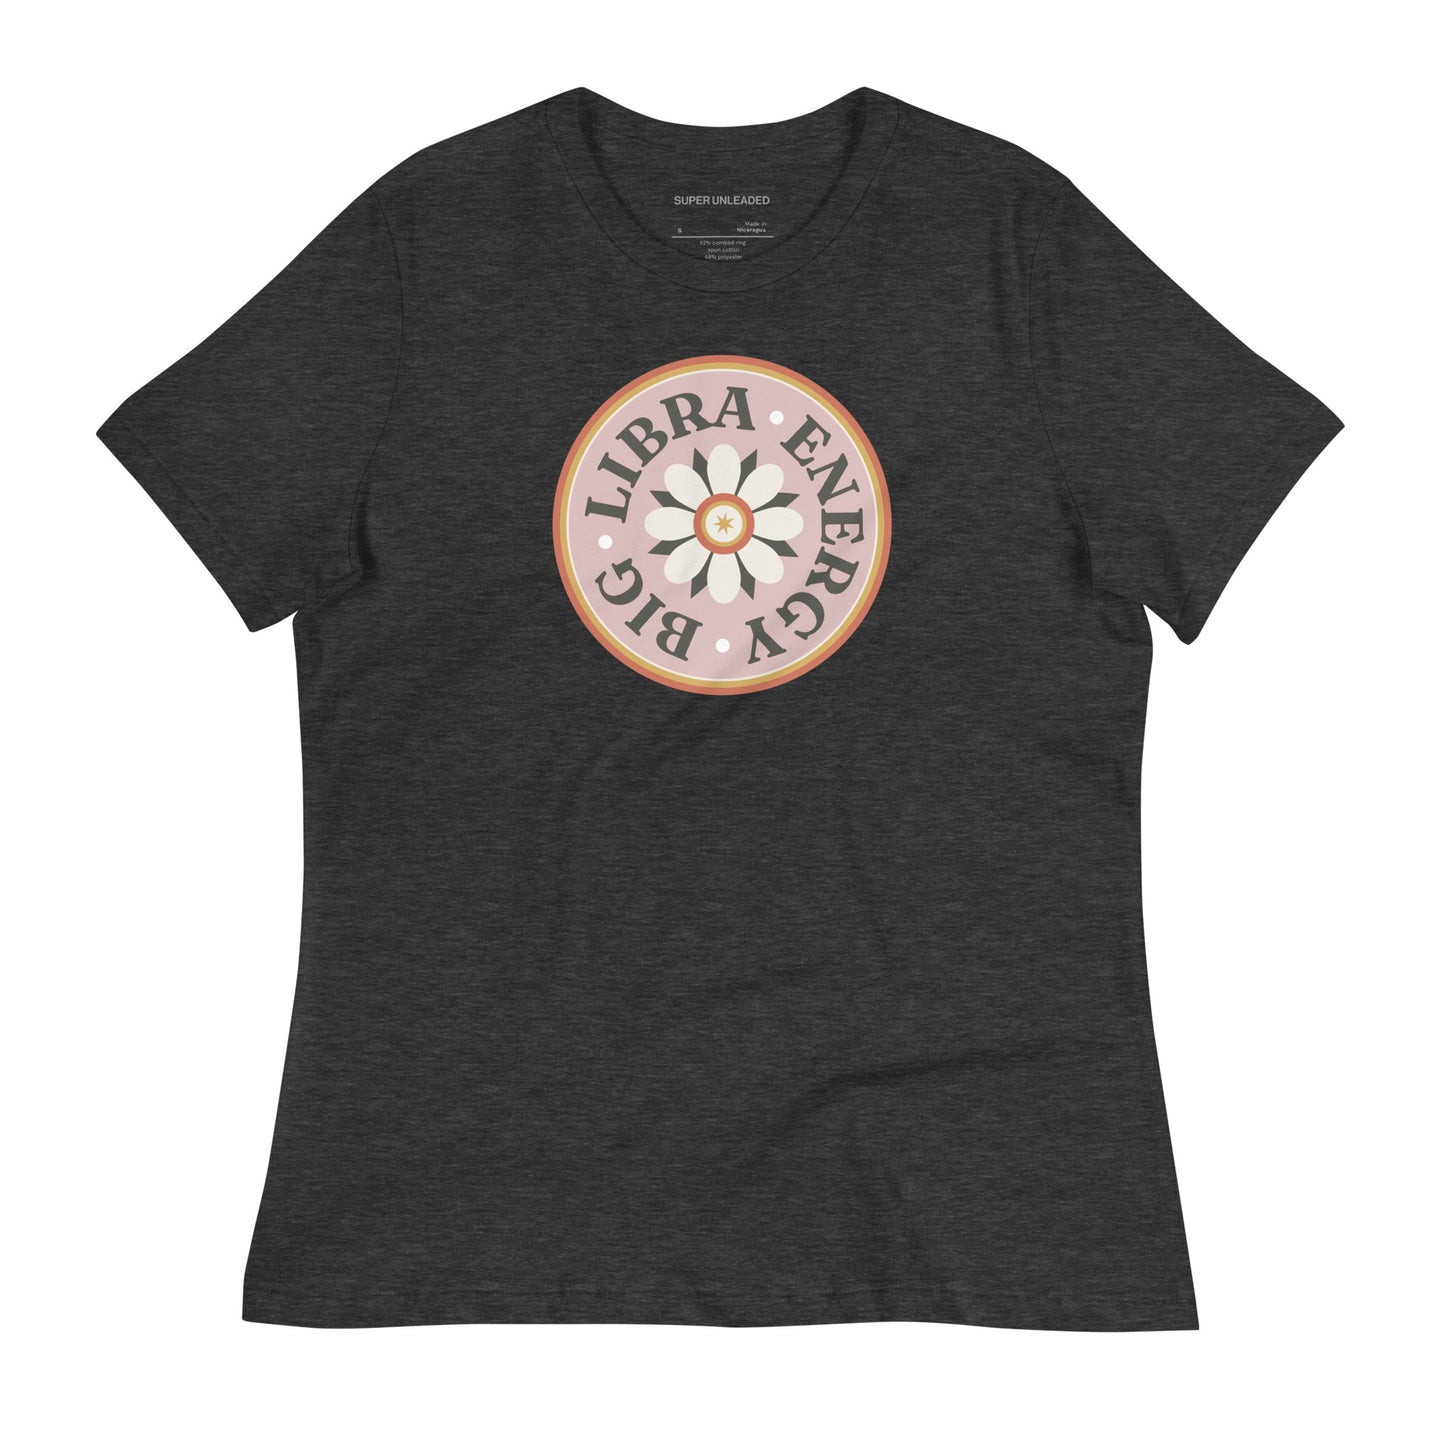 Big Libra Energy T-Shirt